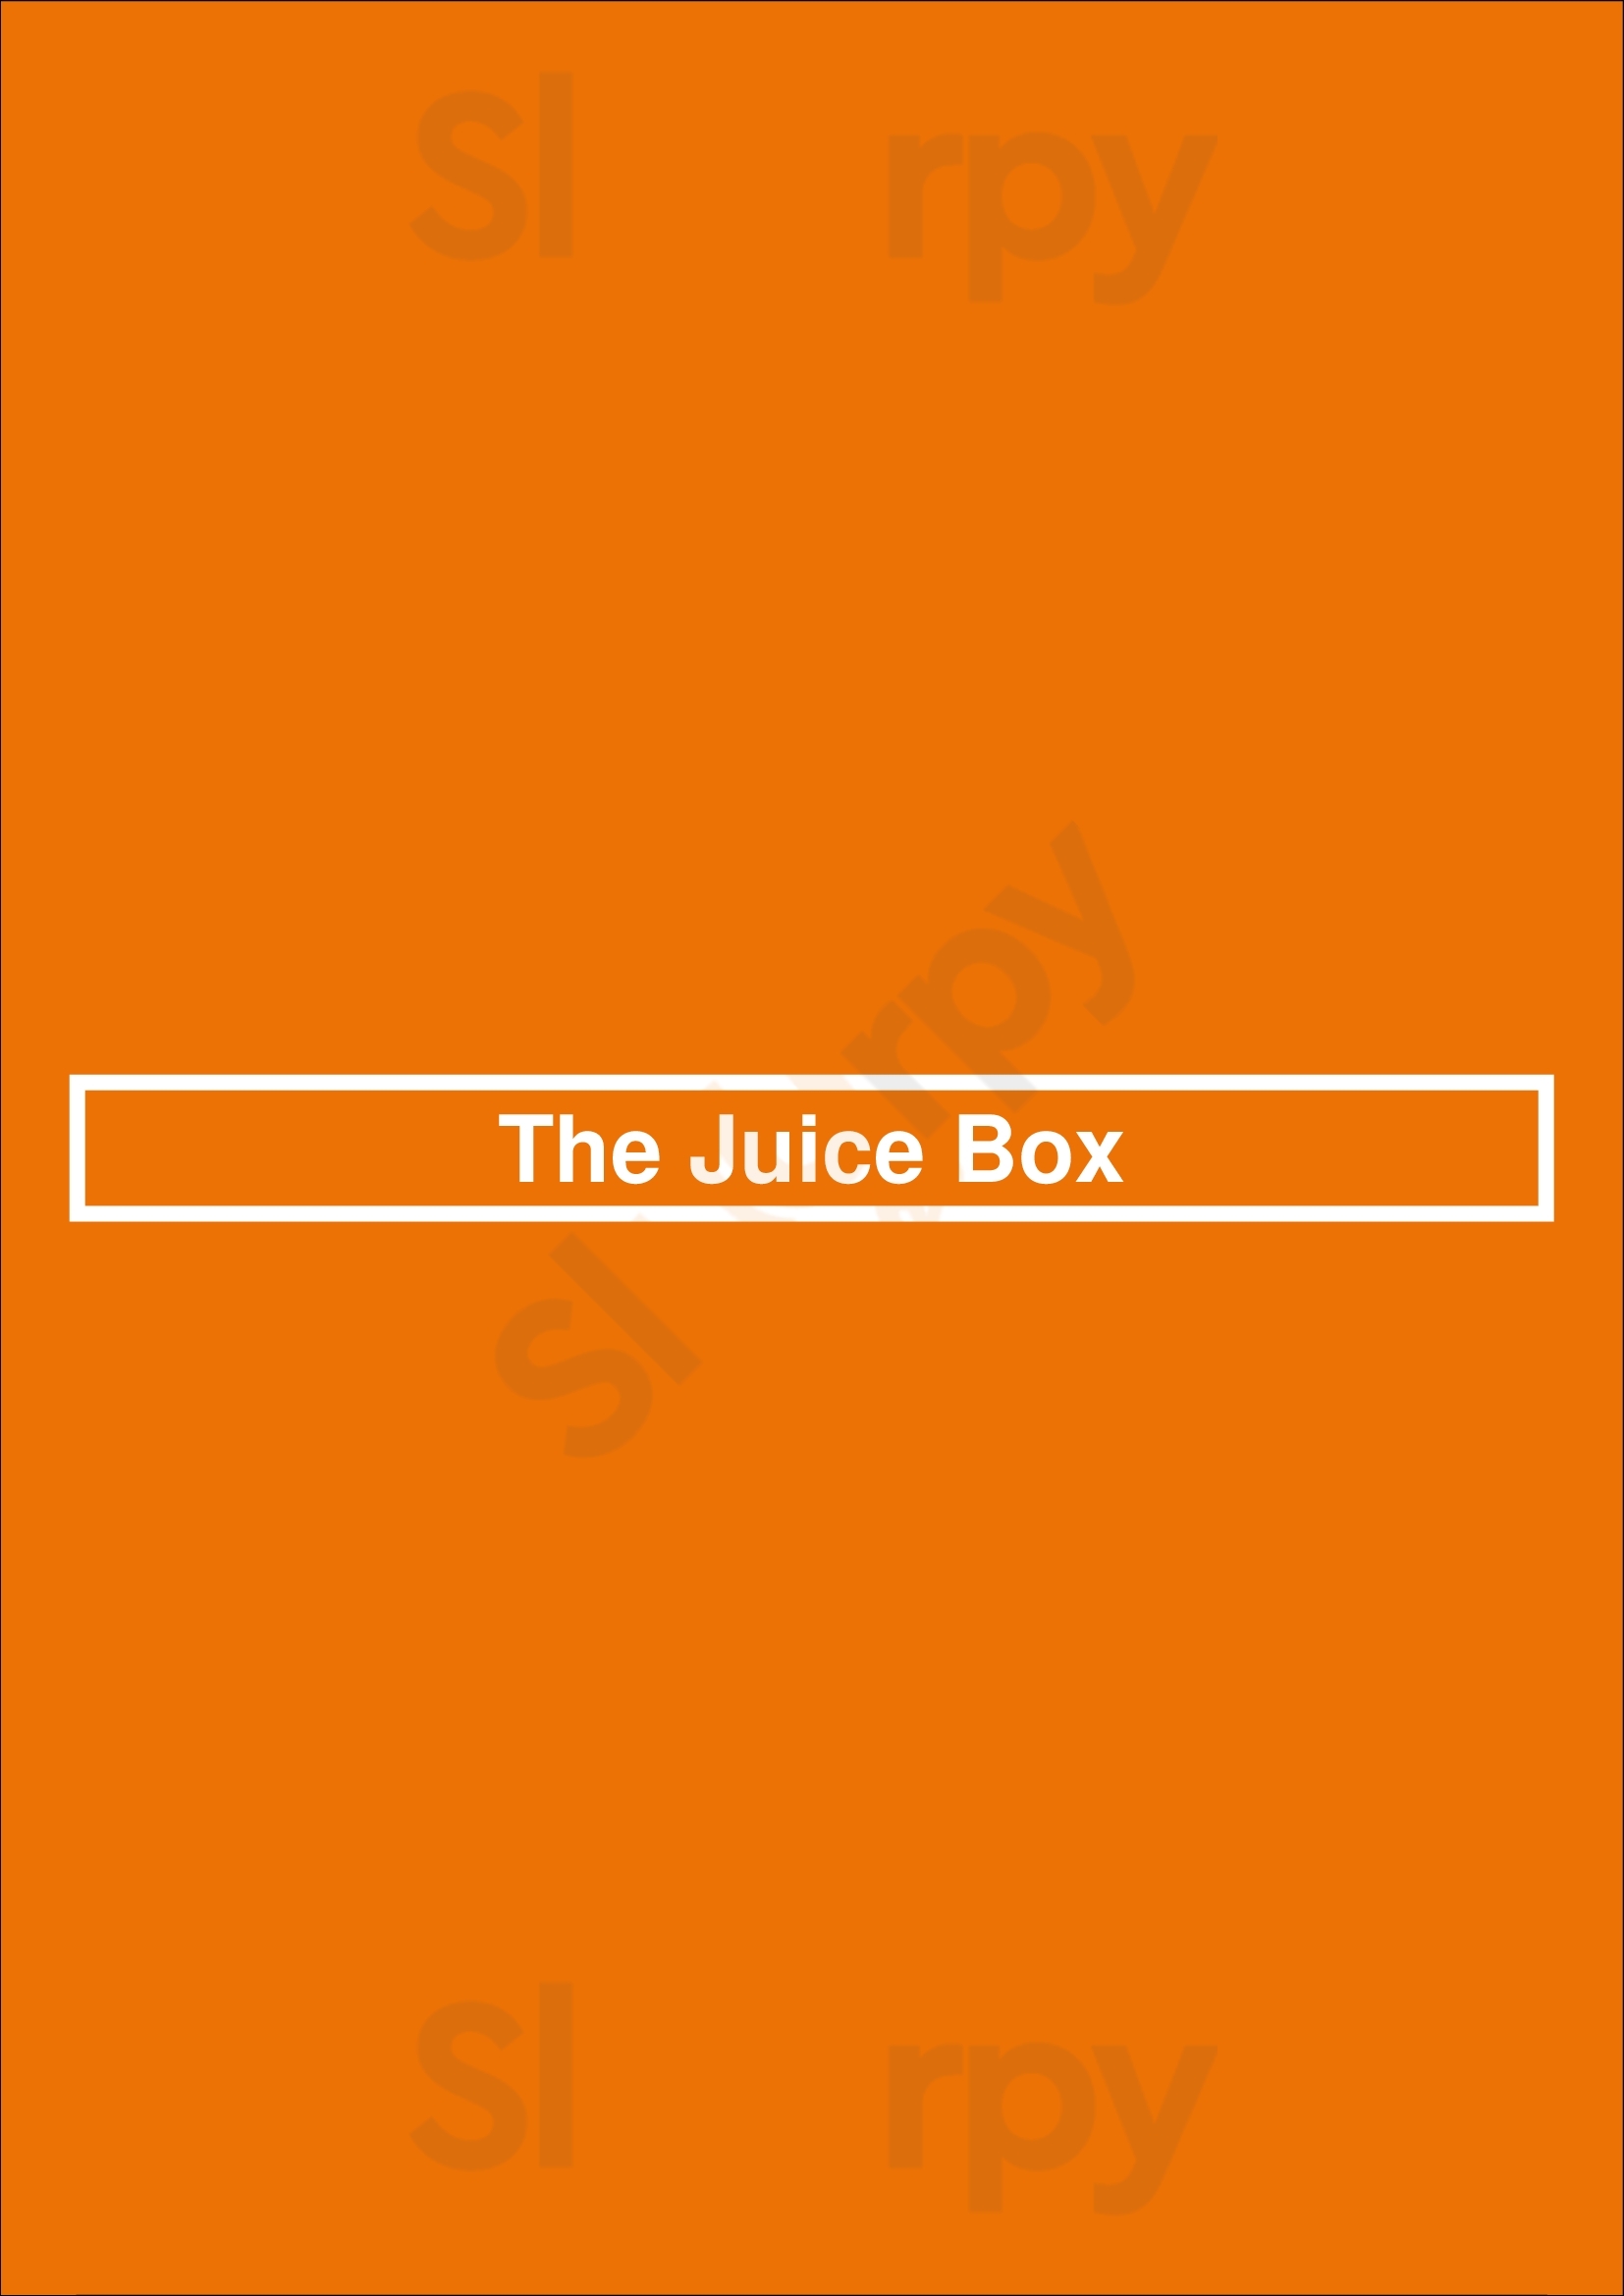 The Juice Box Boston Menu - 1